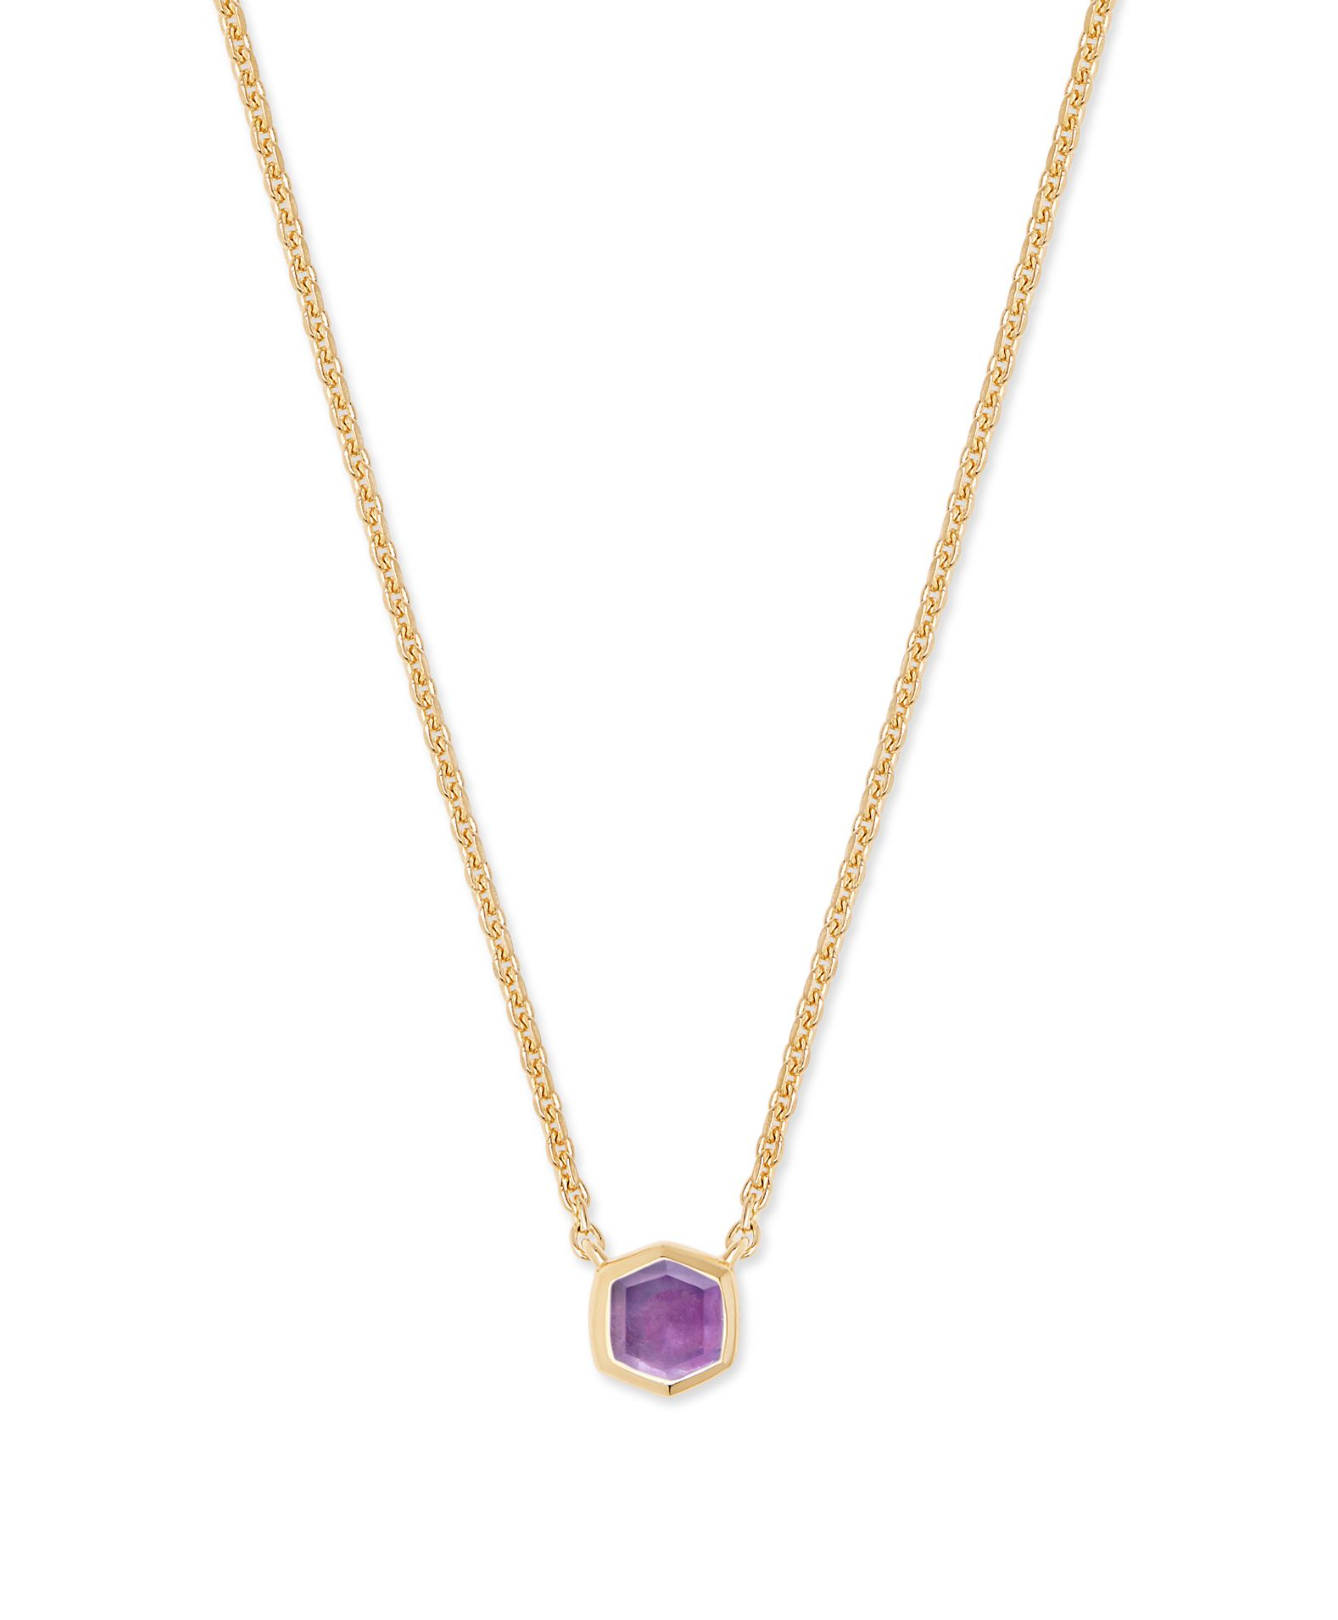 Davie 18k Gold Vermeil Pendant Necklace in Amethyst | KENDRA SCOTT - The Street Boutique 